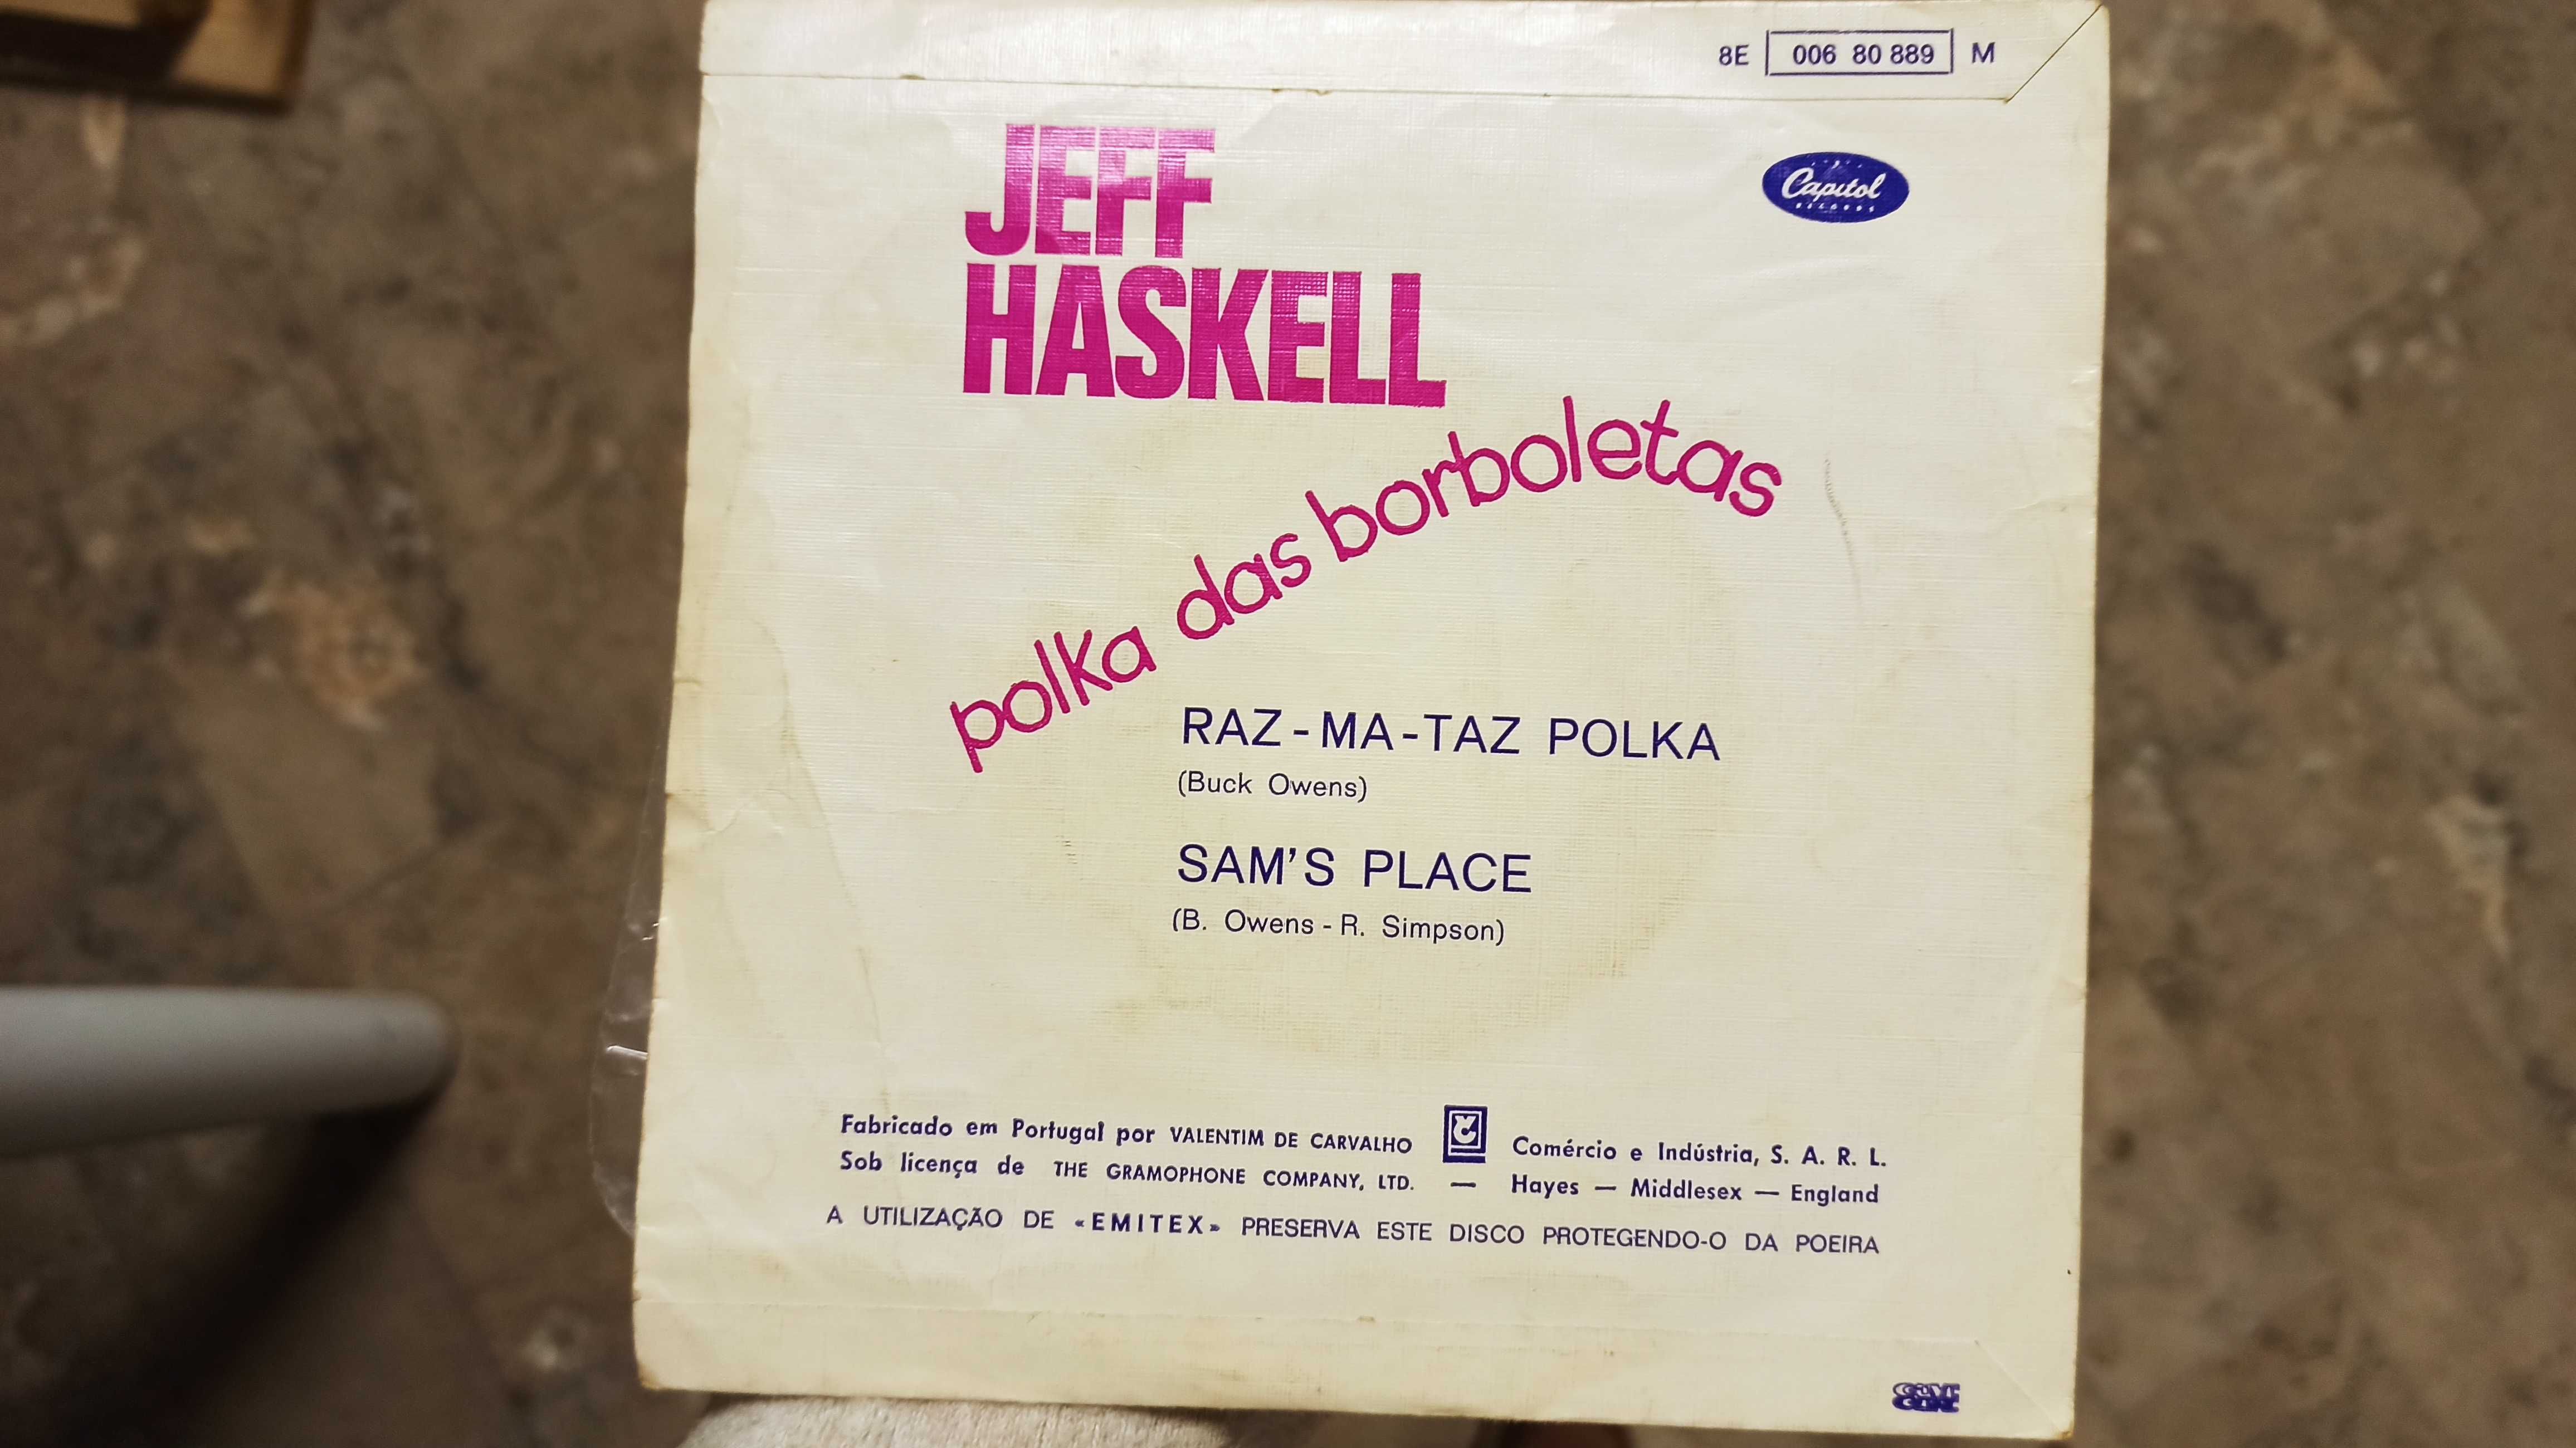 Disco de Vinil "Jeff Haskell – Polka Das Borboletas"